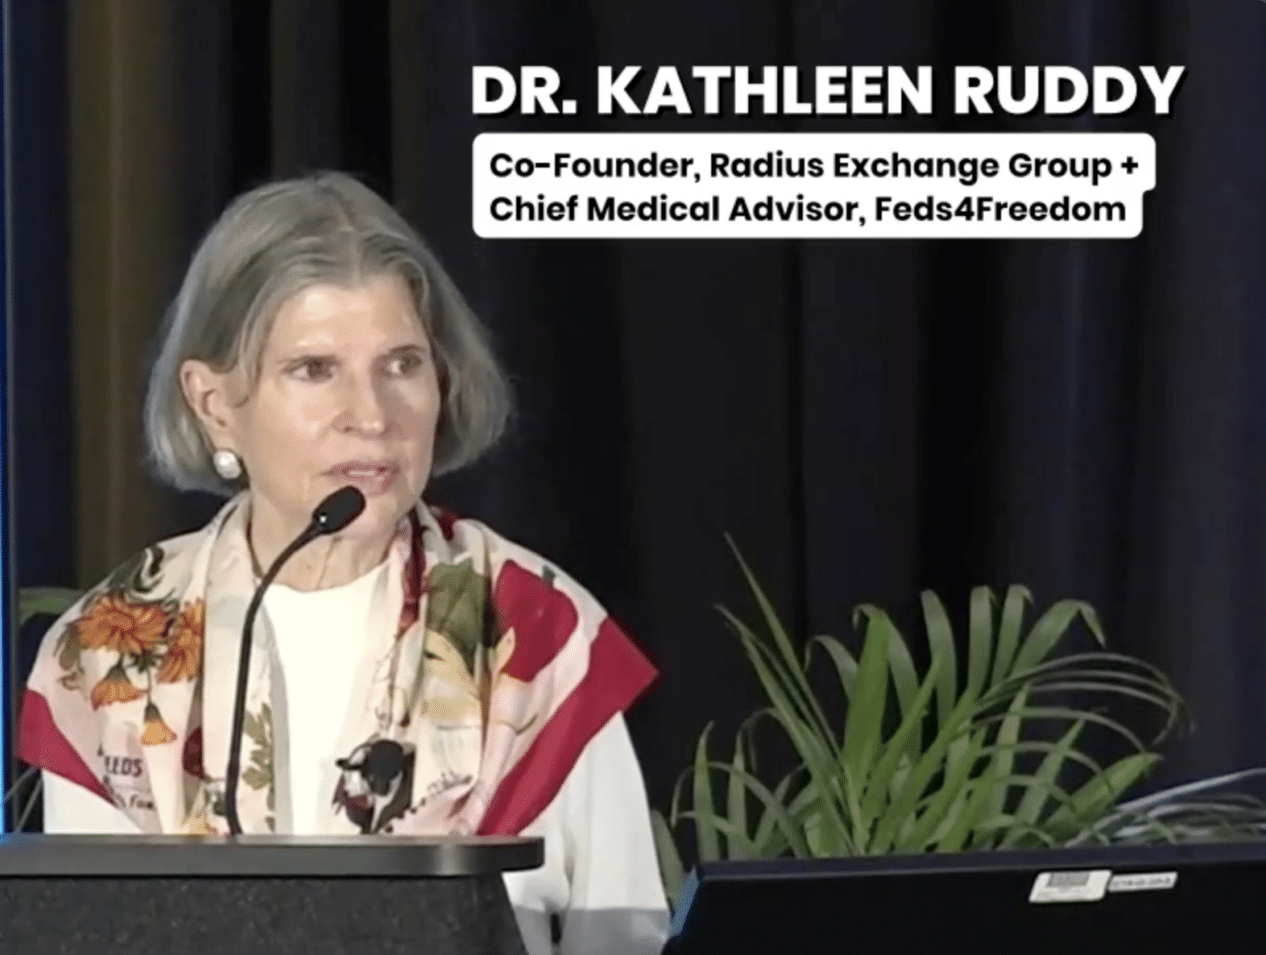 Dr. Kathleen Ruddy